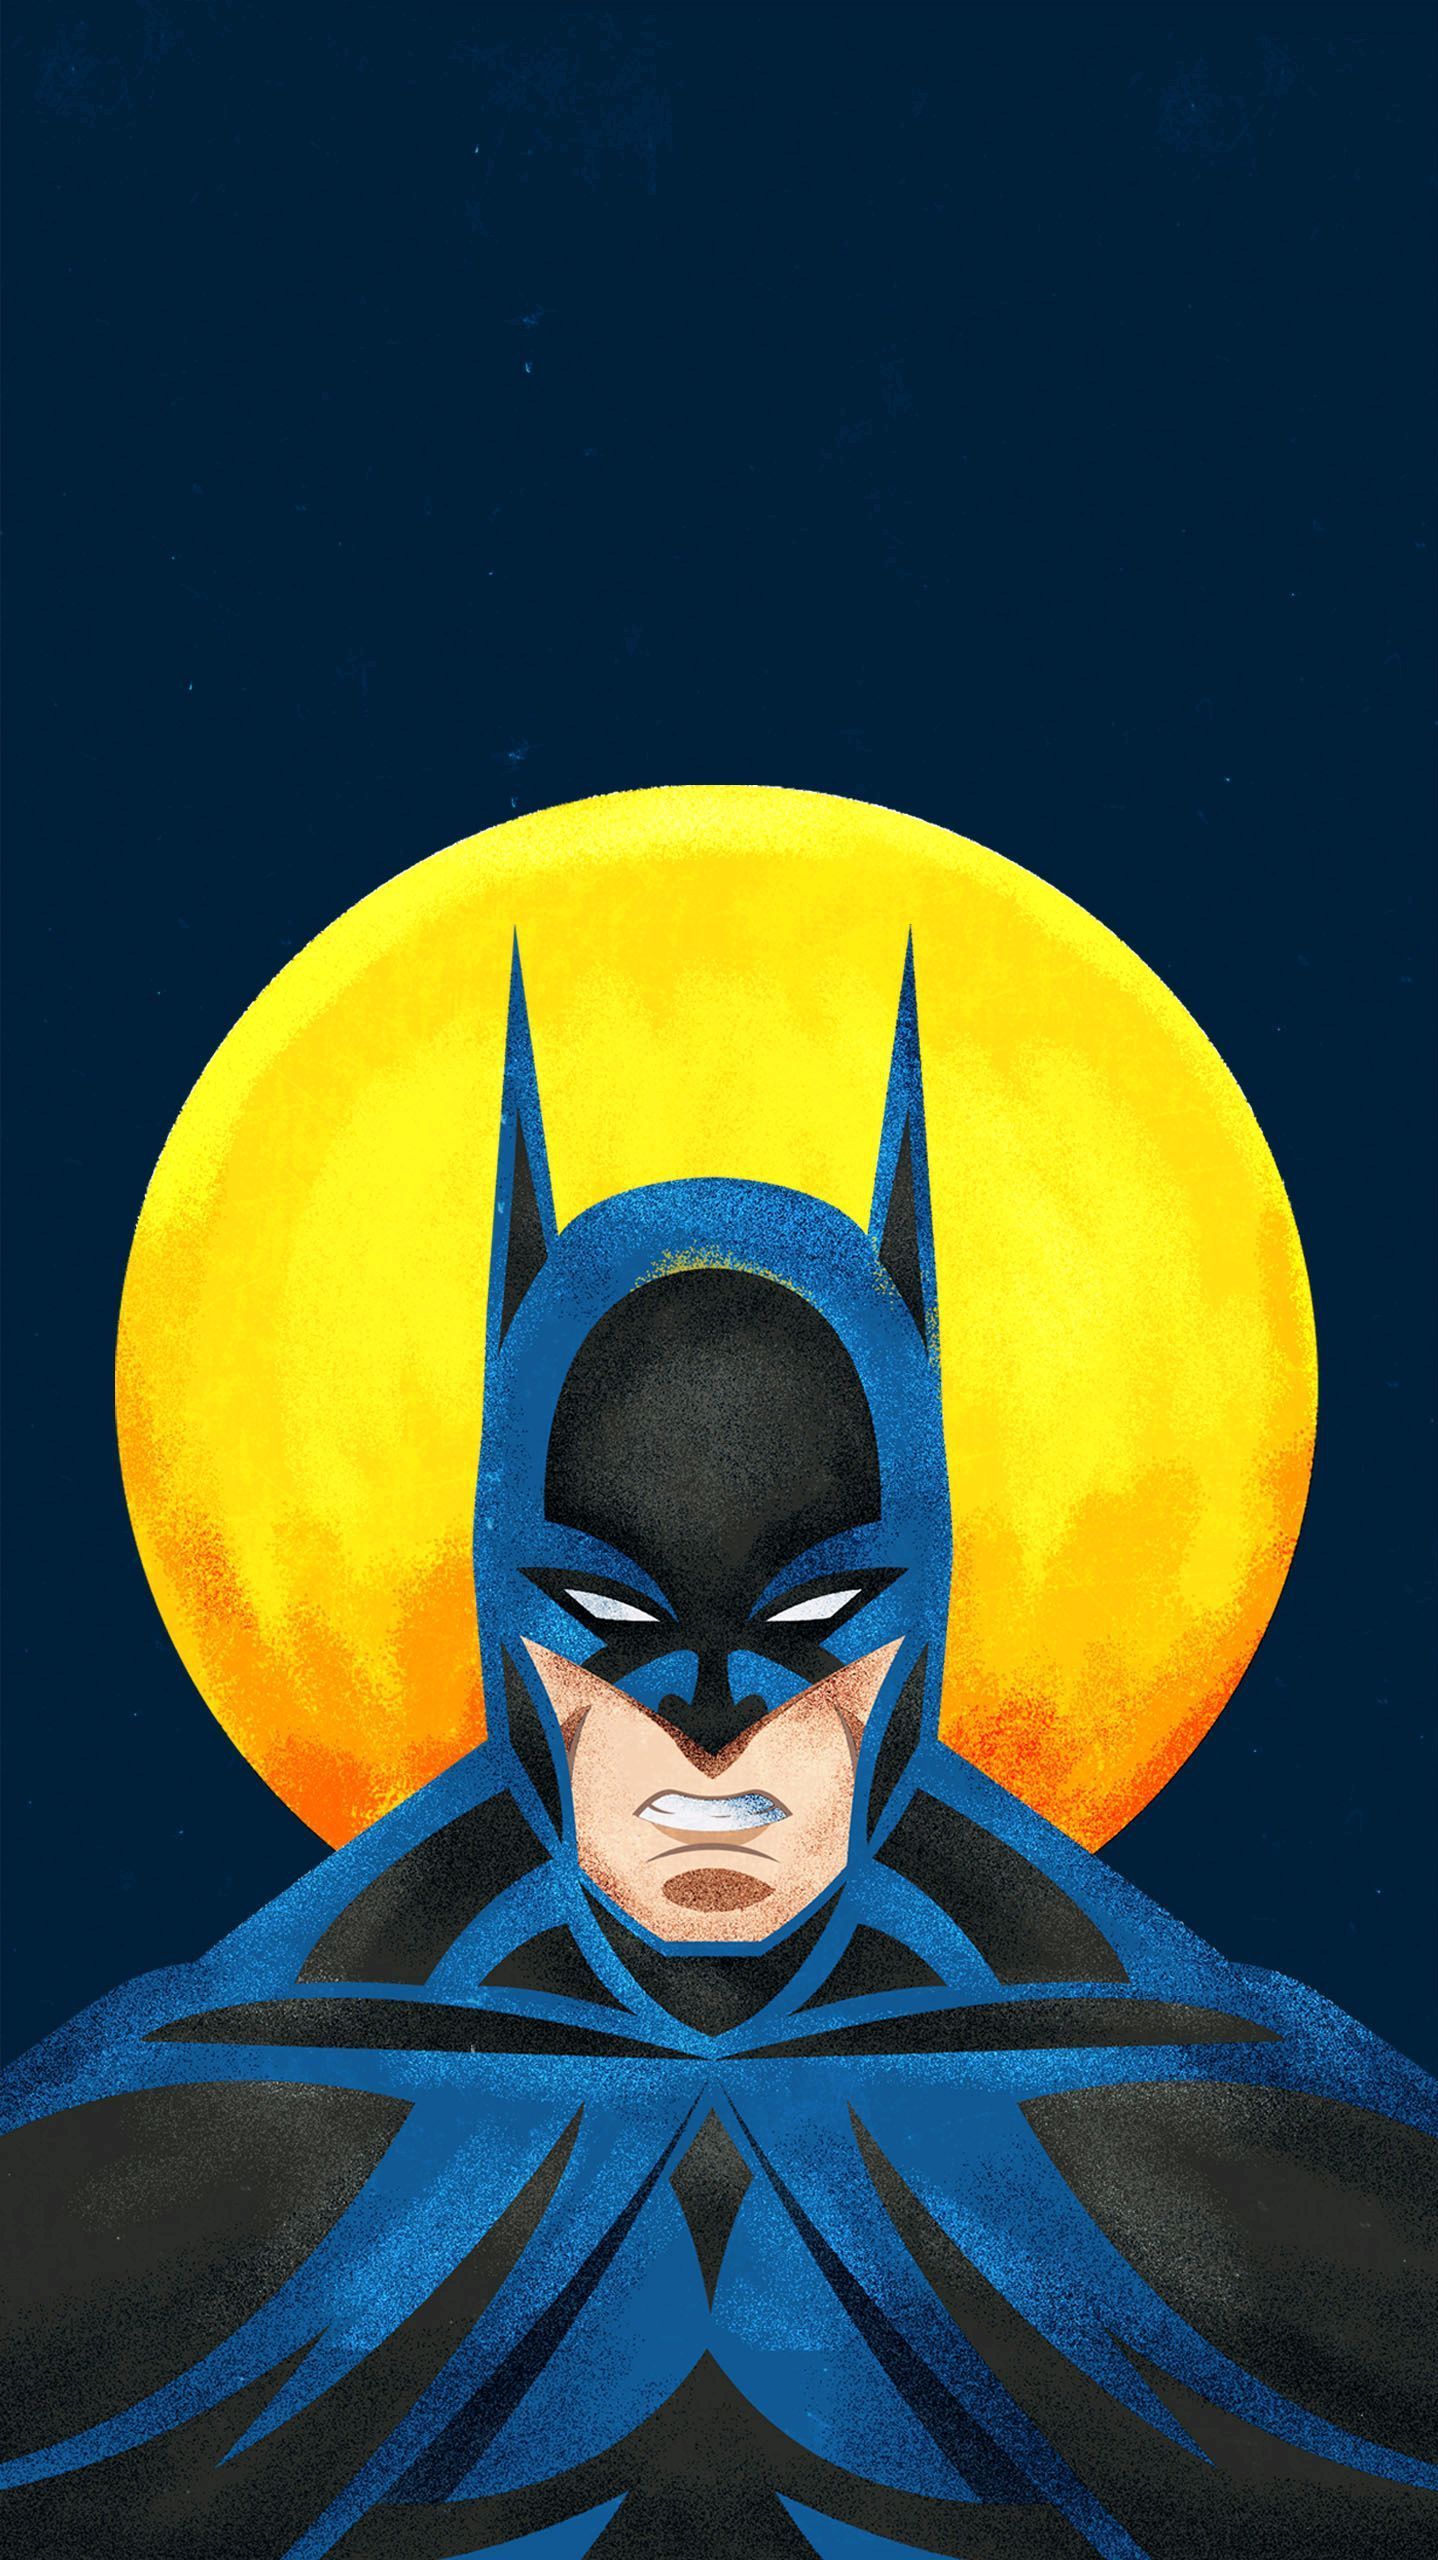 Angry Batman Art IPhone Wallpaper. iPhone wallpaper, Batman art, Batman wallpaper